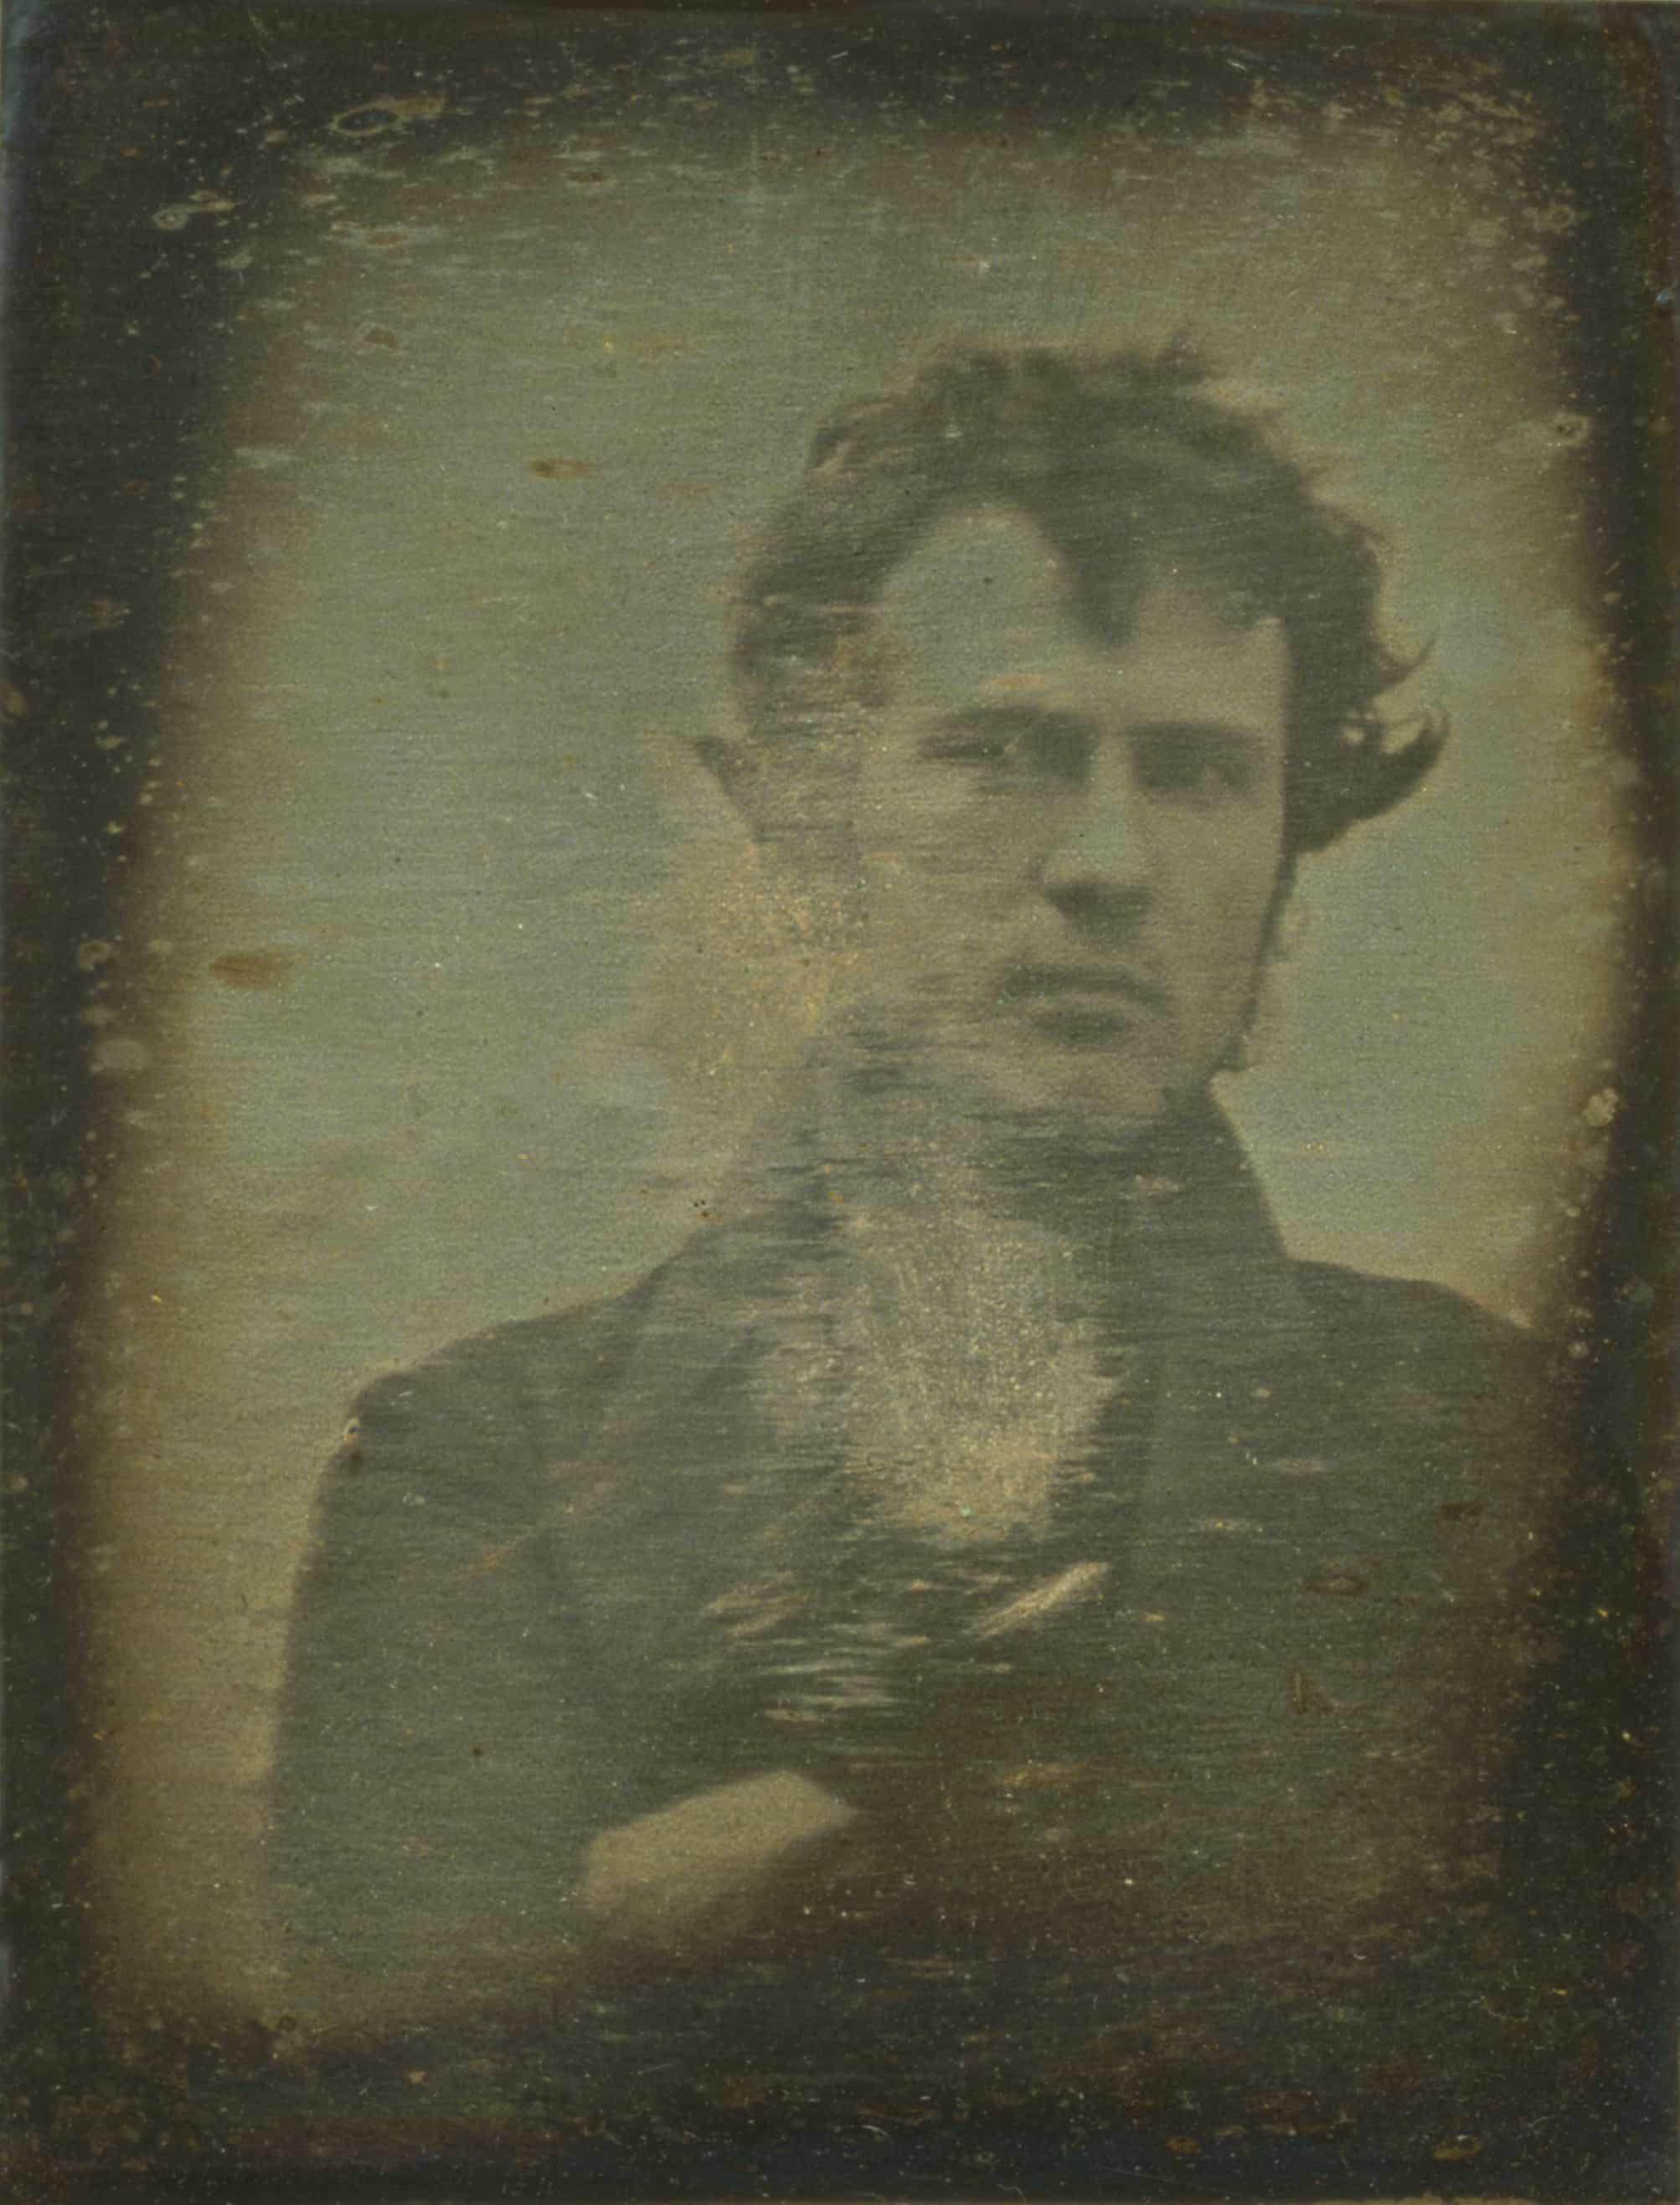 The first “selfie” taken by Robert Cornelius in 1837